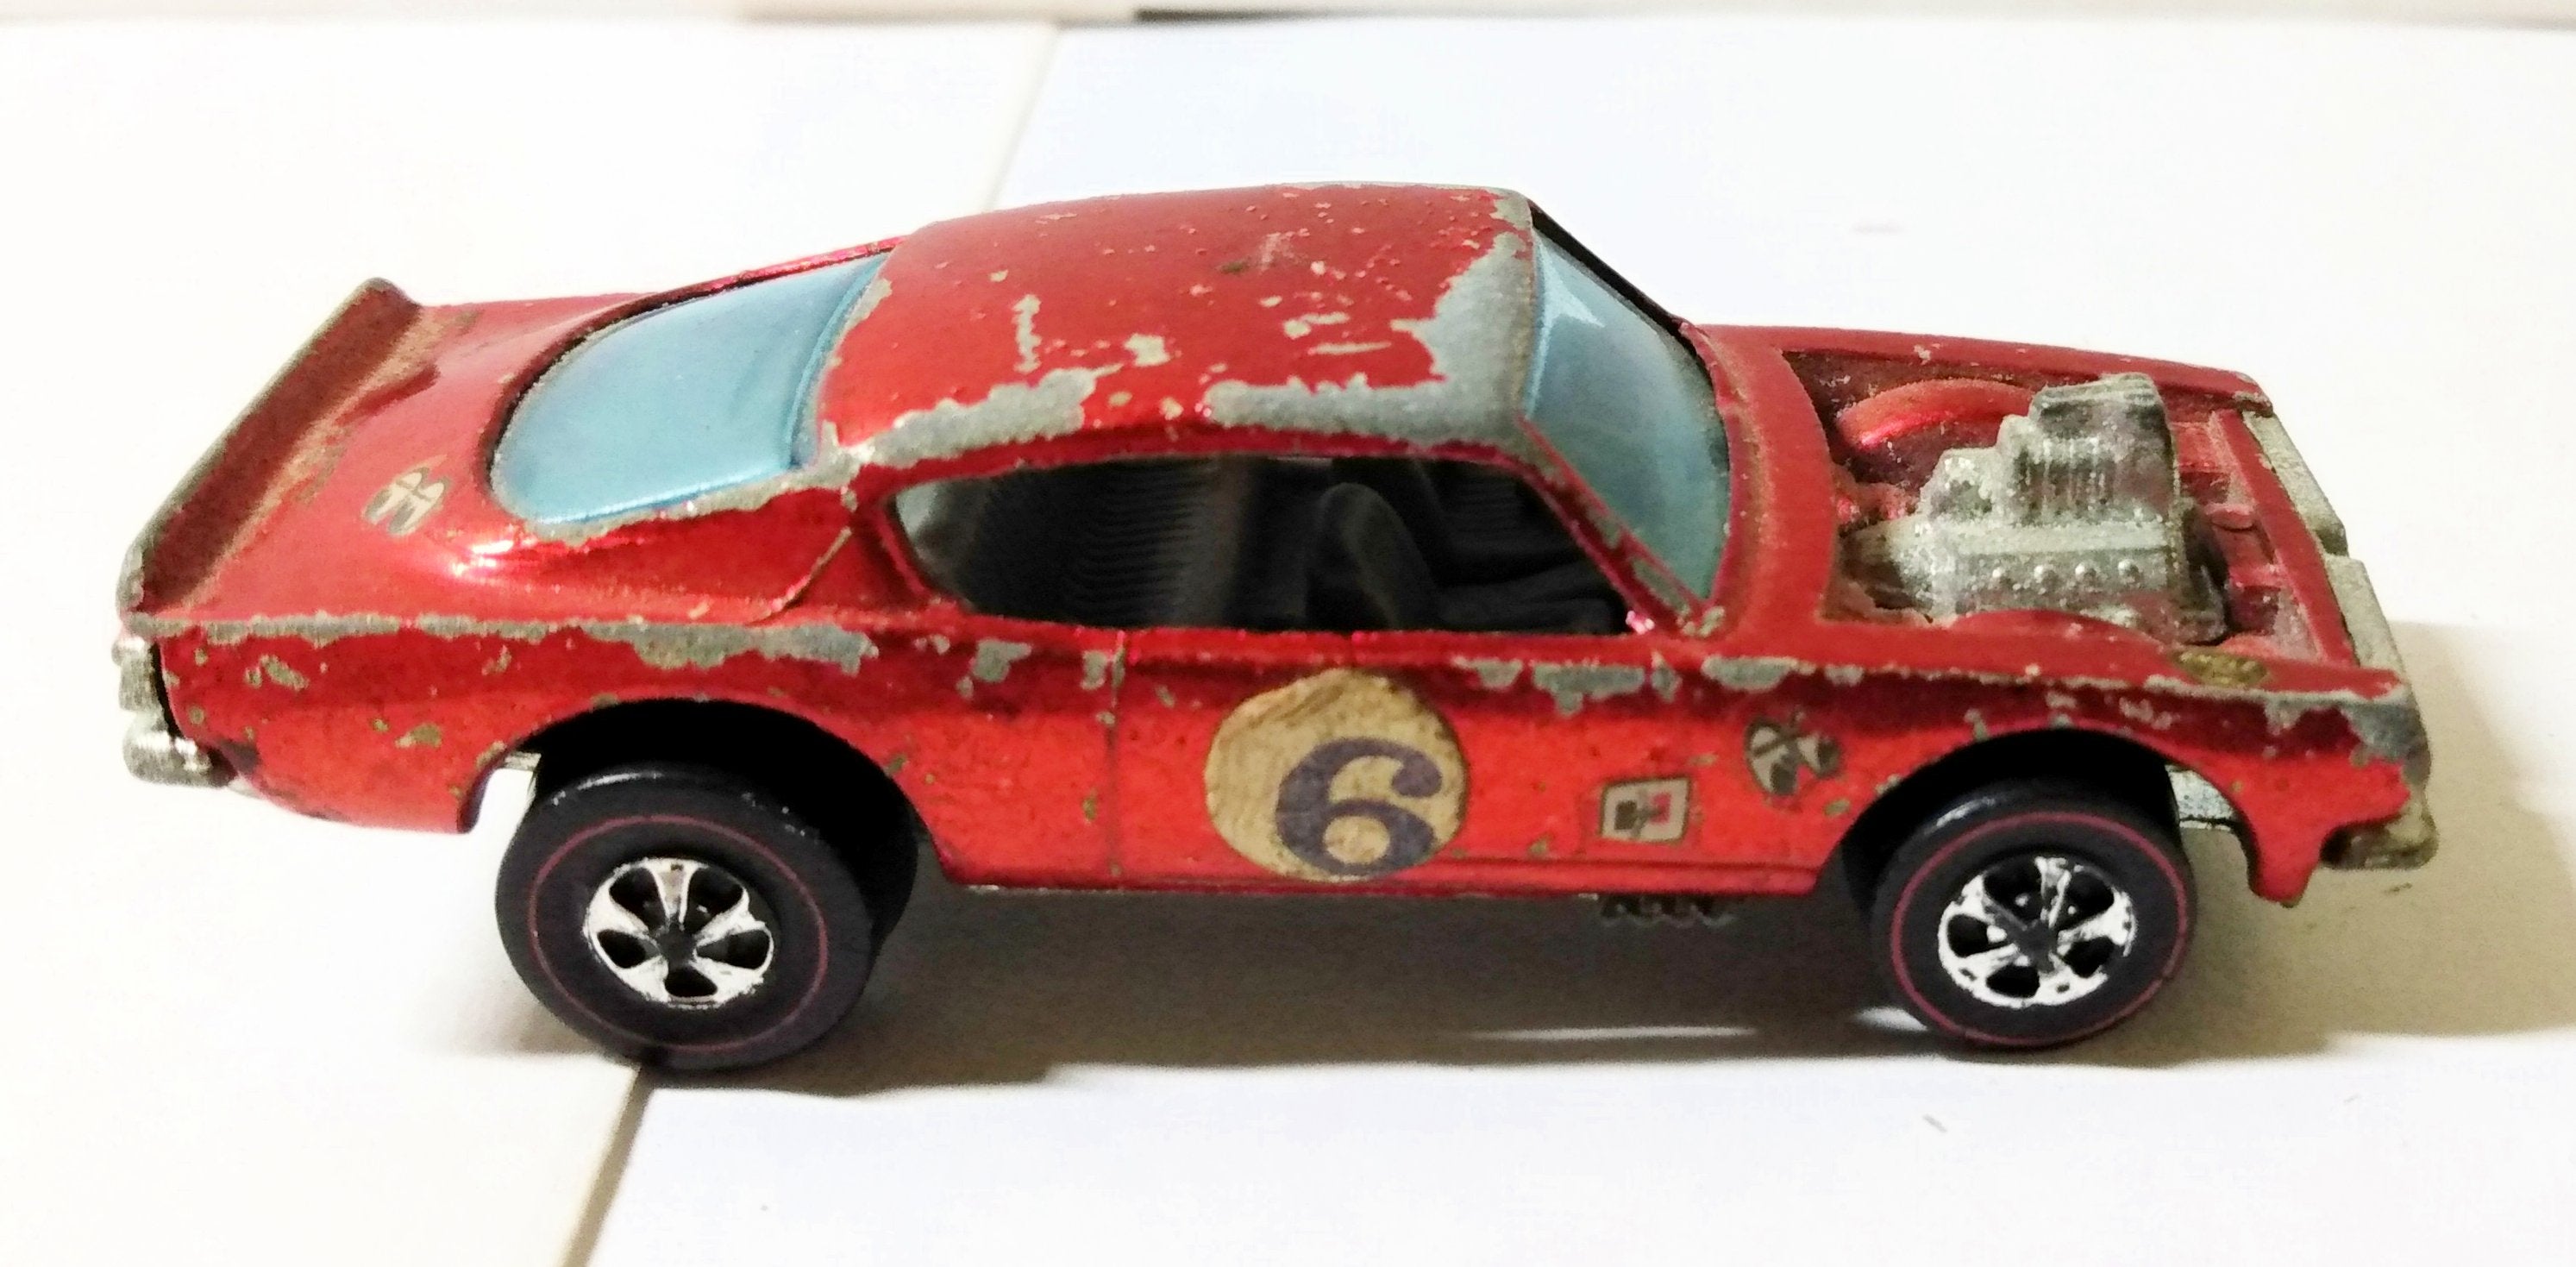 Hot Wheels HW Showroom (2012) Red '70 Plymouth Barracuda Toy car